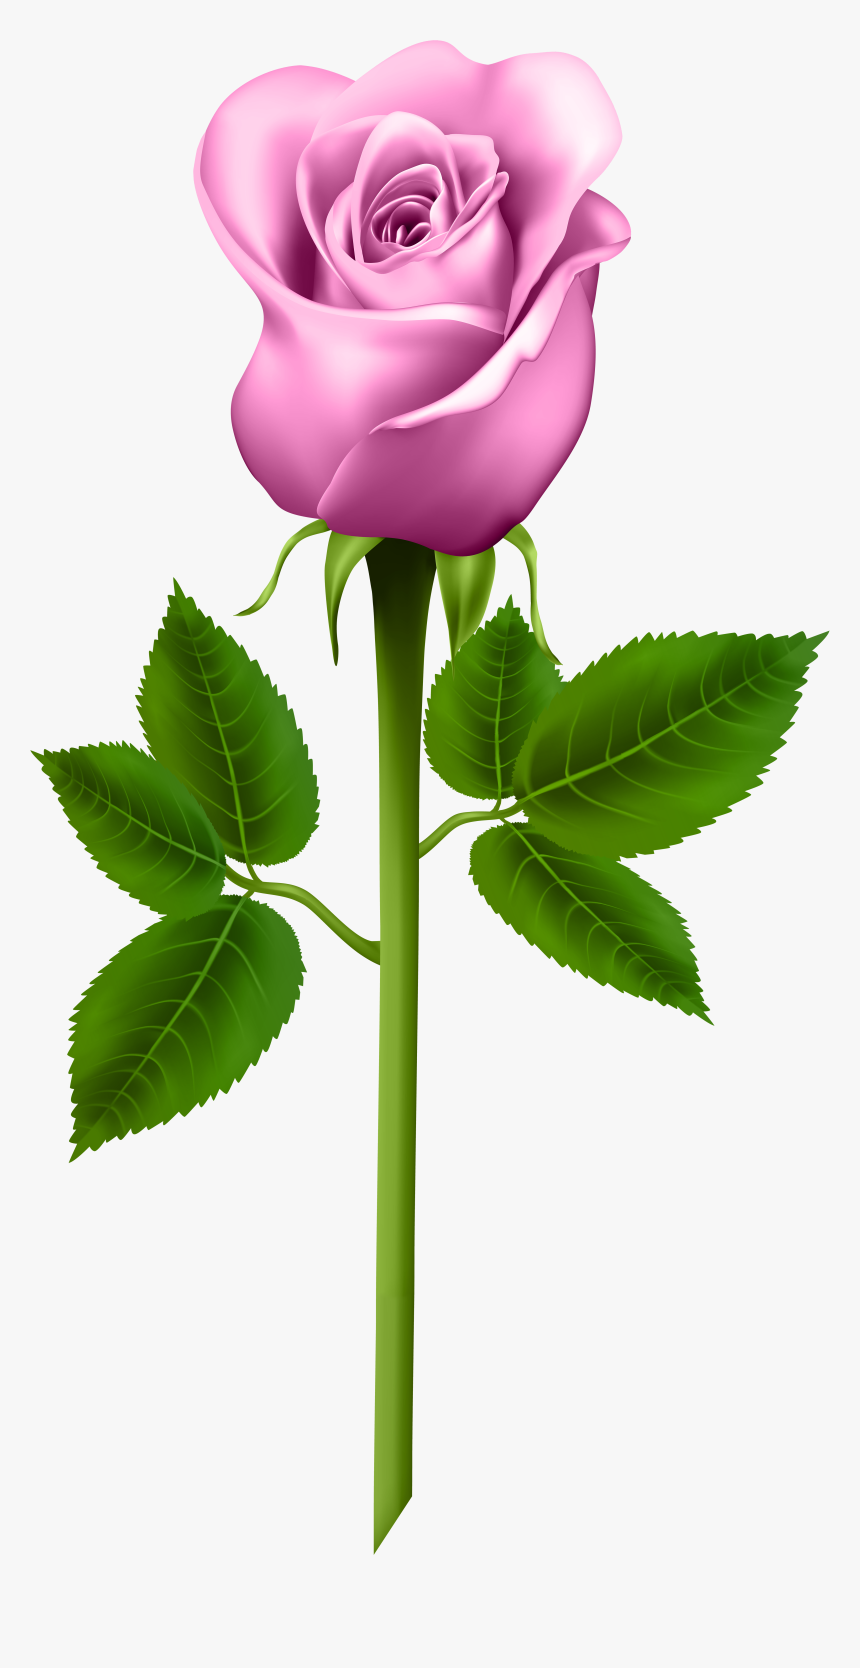 Rose Flower Good Morning Images Hd New - Roberto Blog